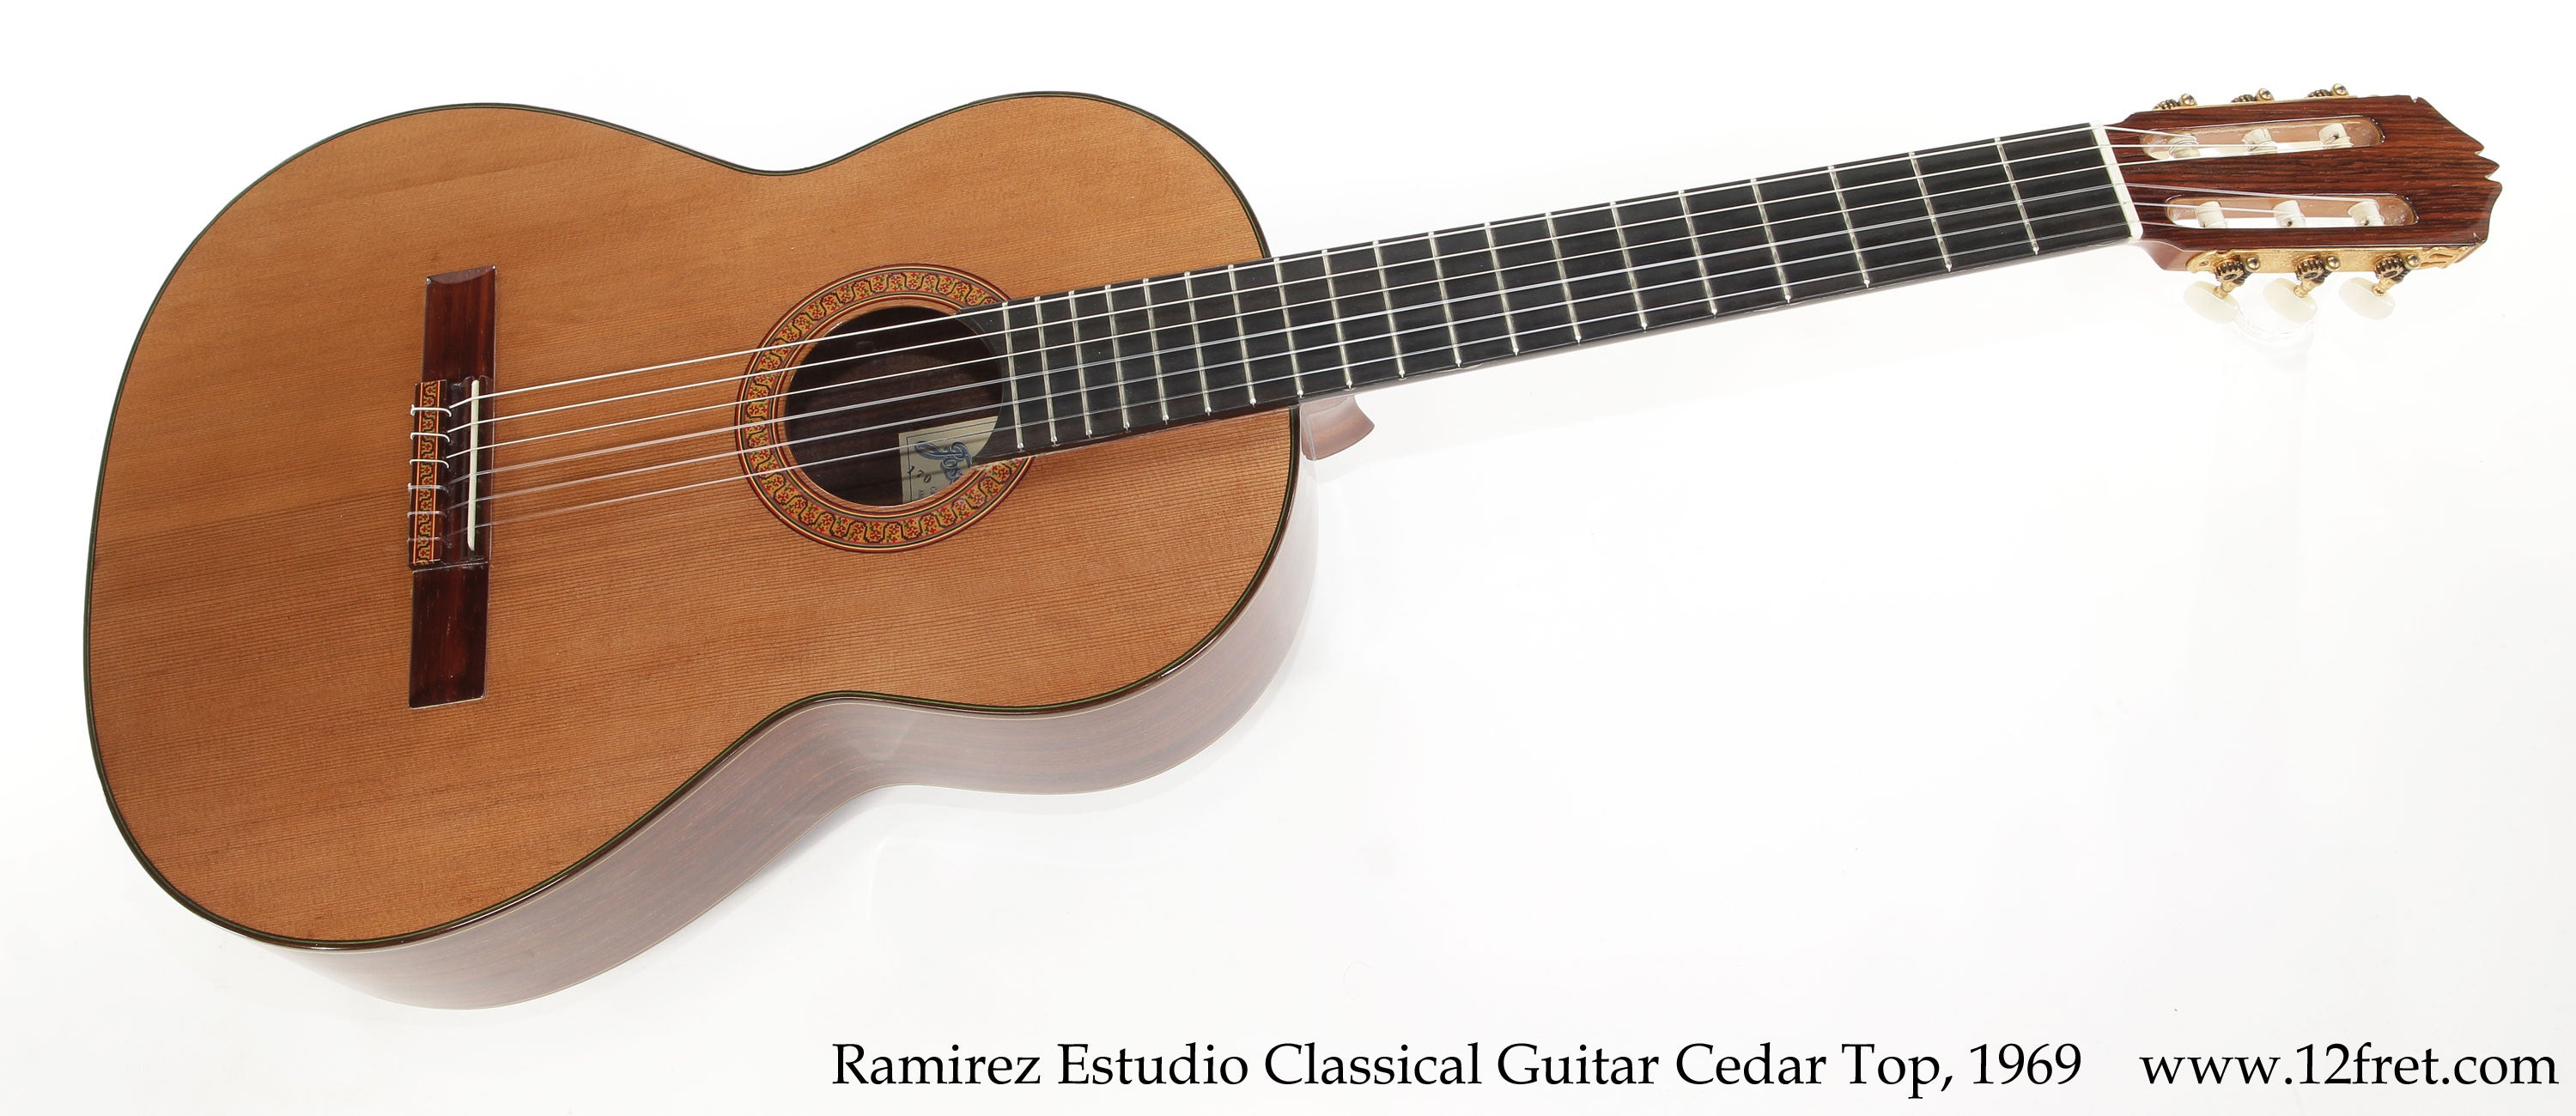 Ramirez Estudio Classical Guitar Cedar Top, 1969    - The Twelfth Fret